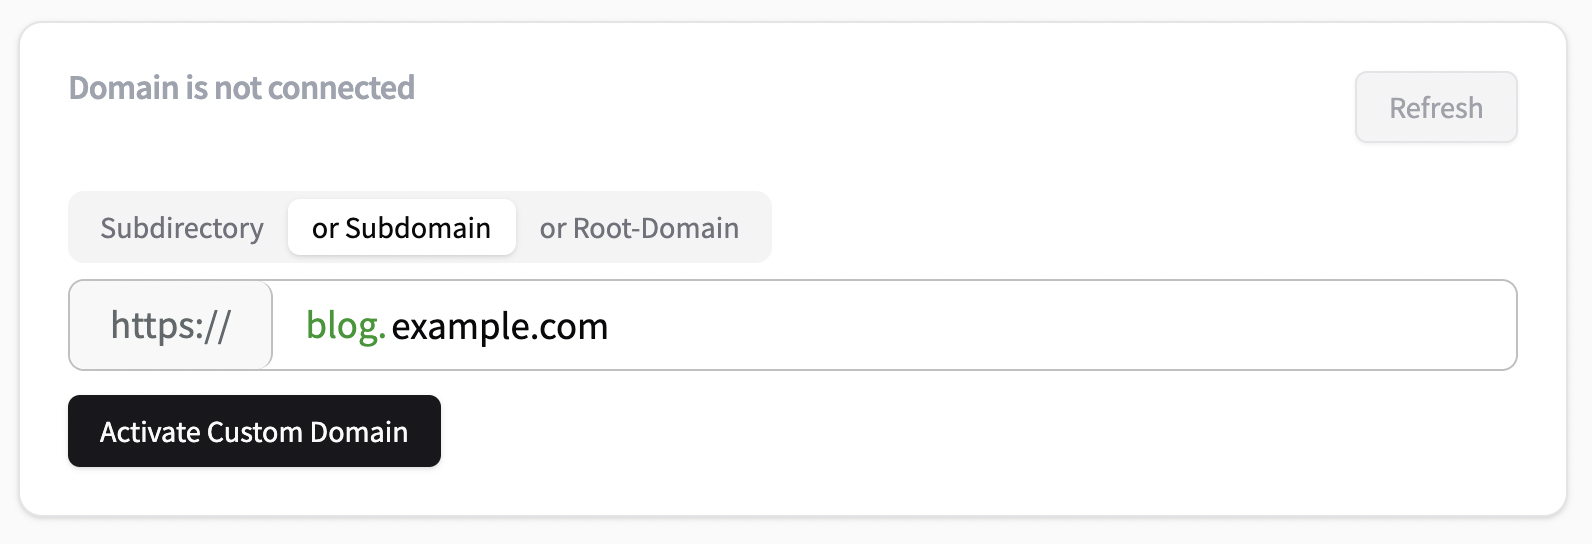 activate custom domain as a sub-domain